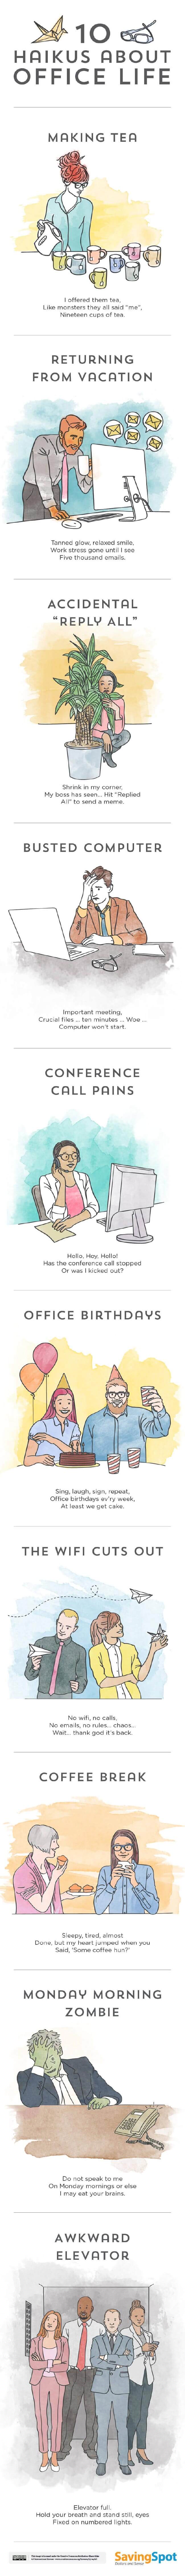 Image titled 10 haikus about office life